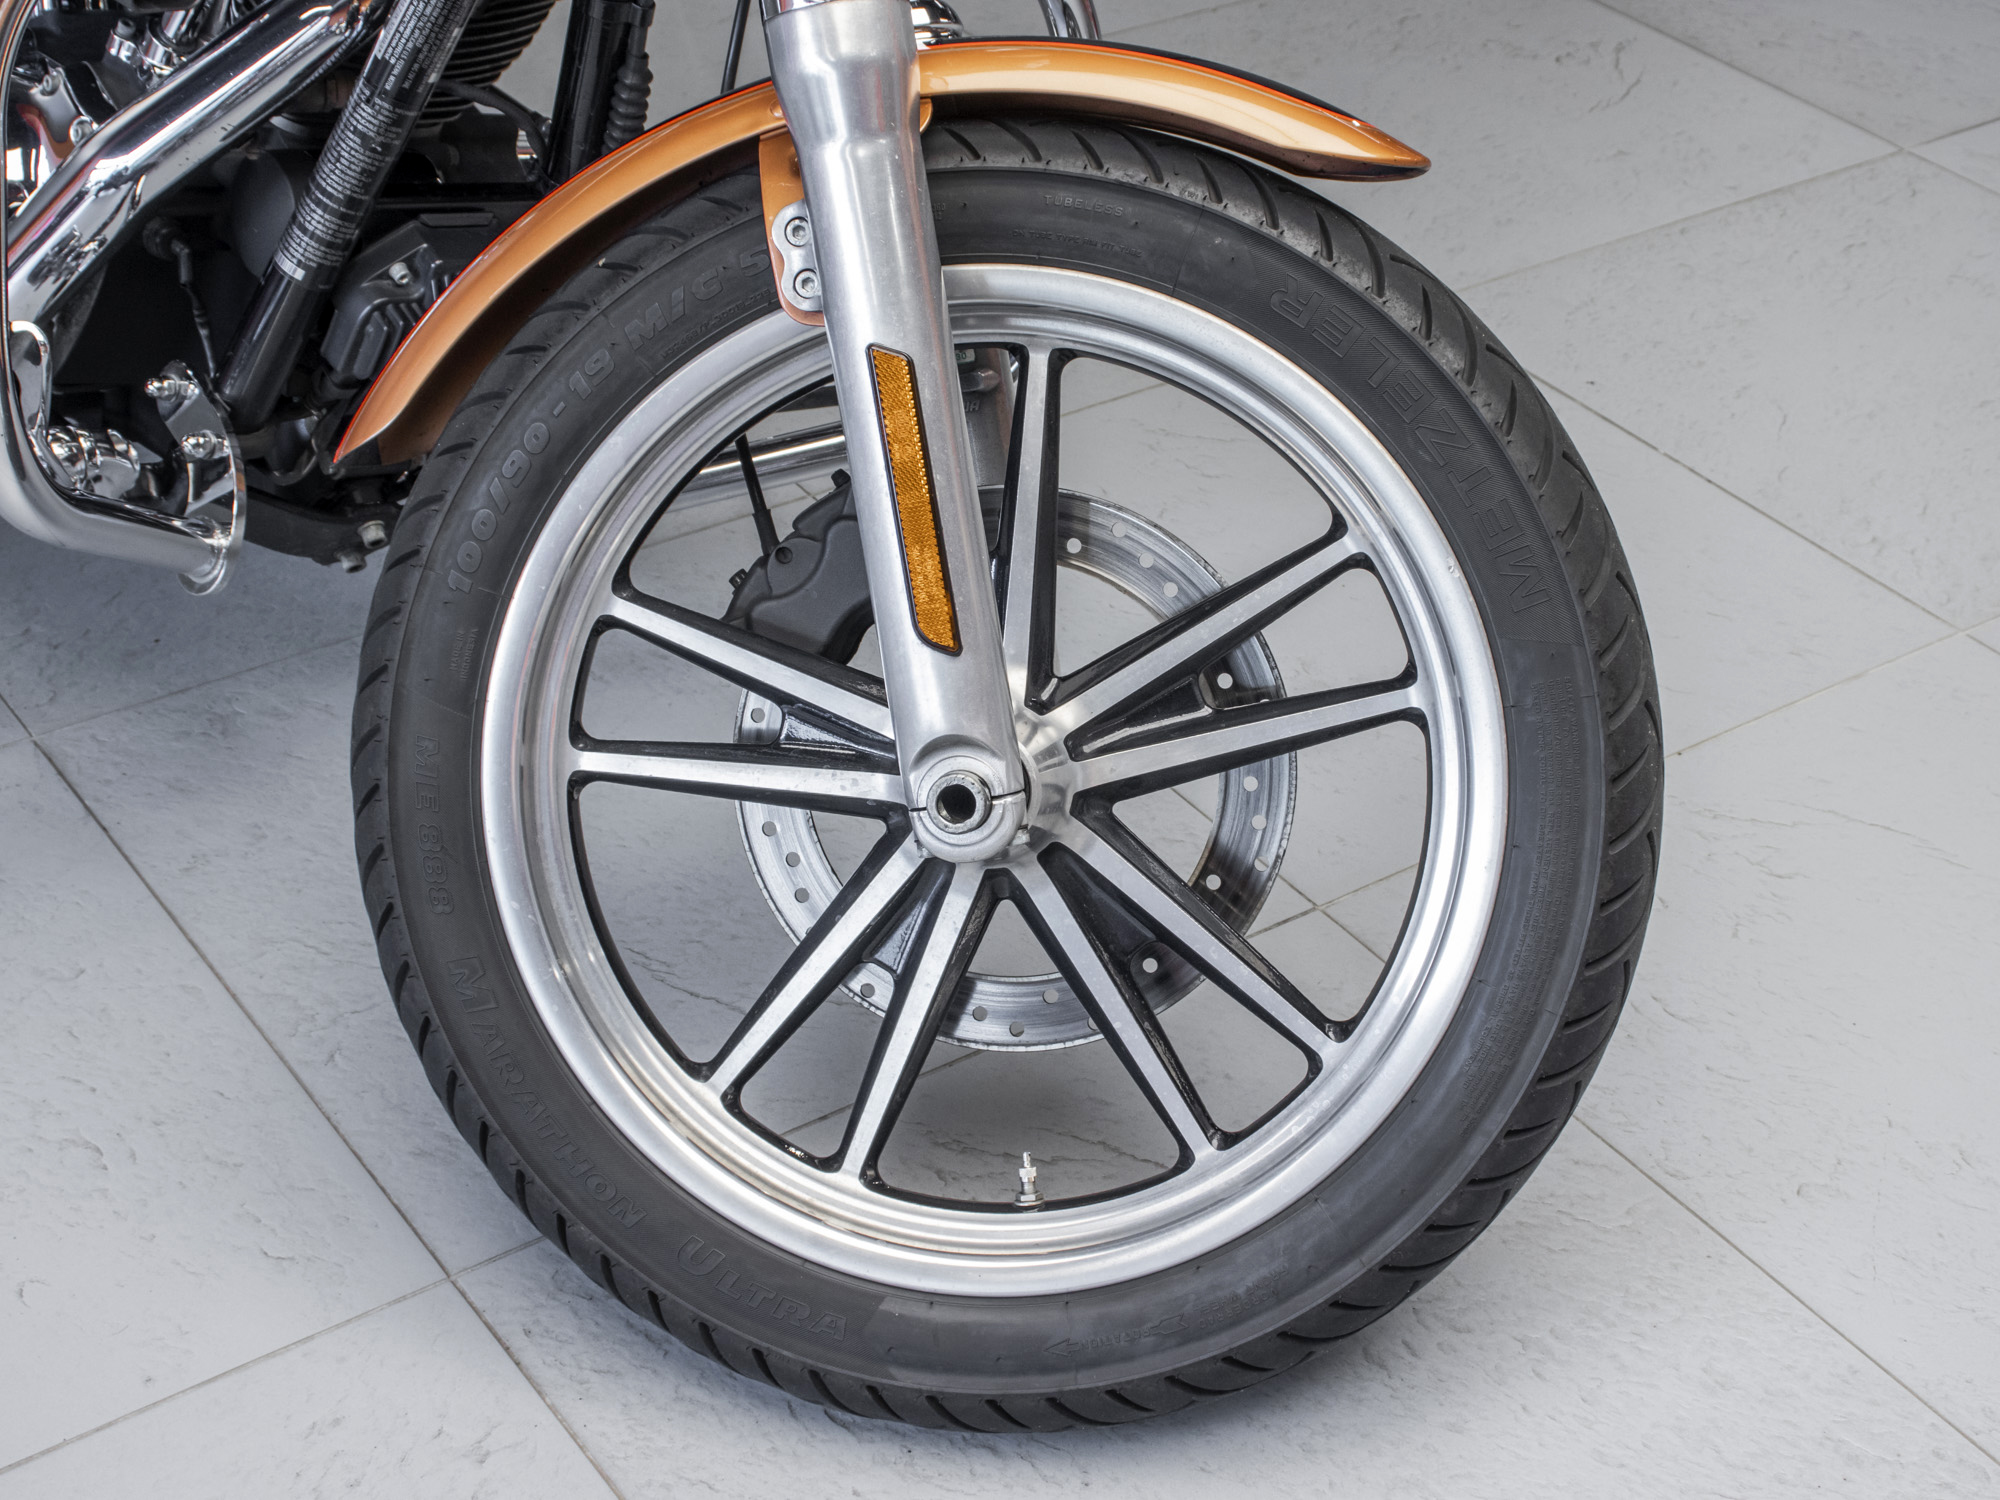 Harley-Davidson Dyna Low Rider FXD L #4483